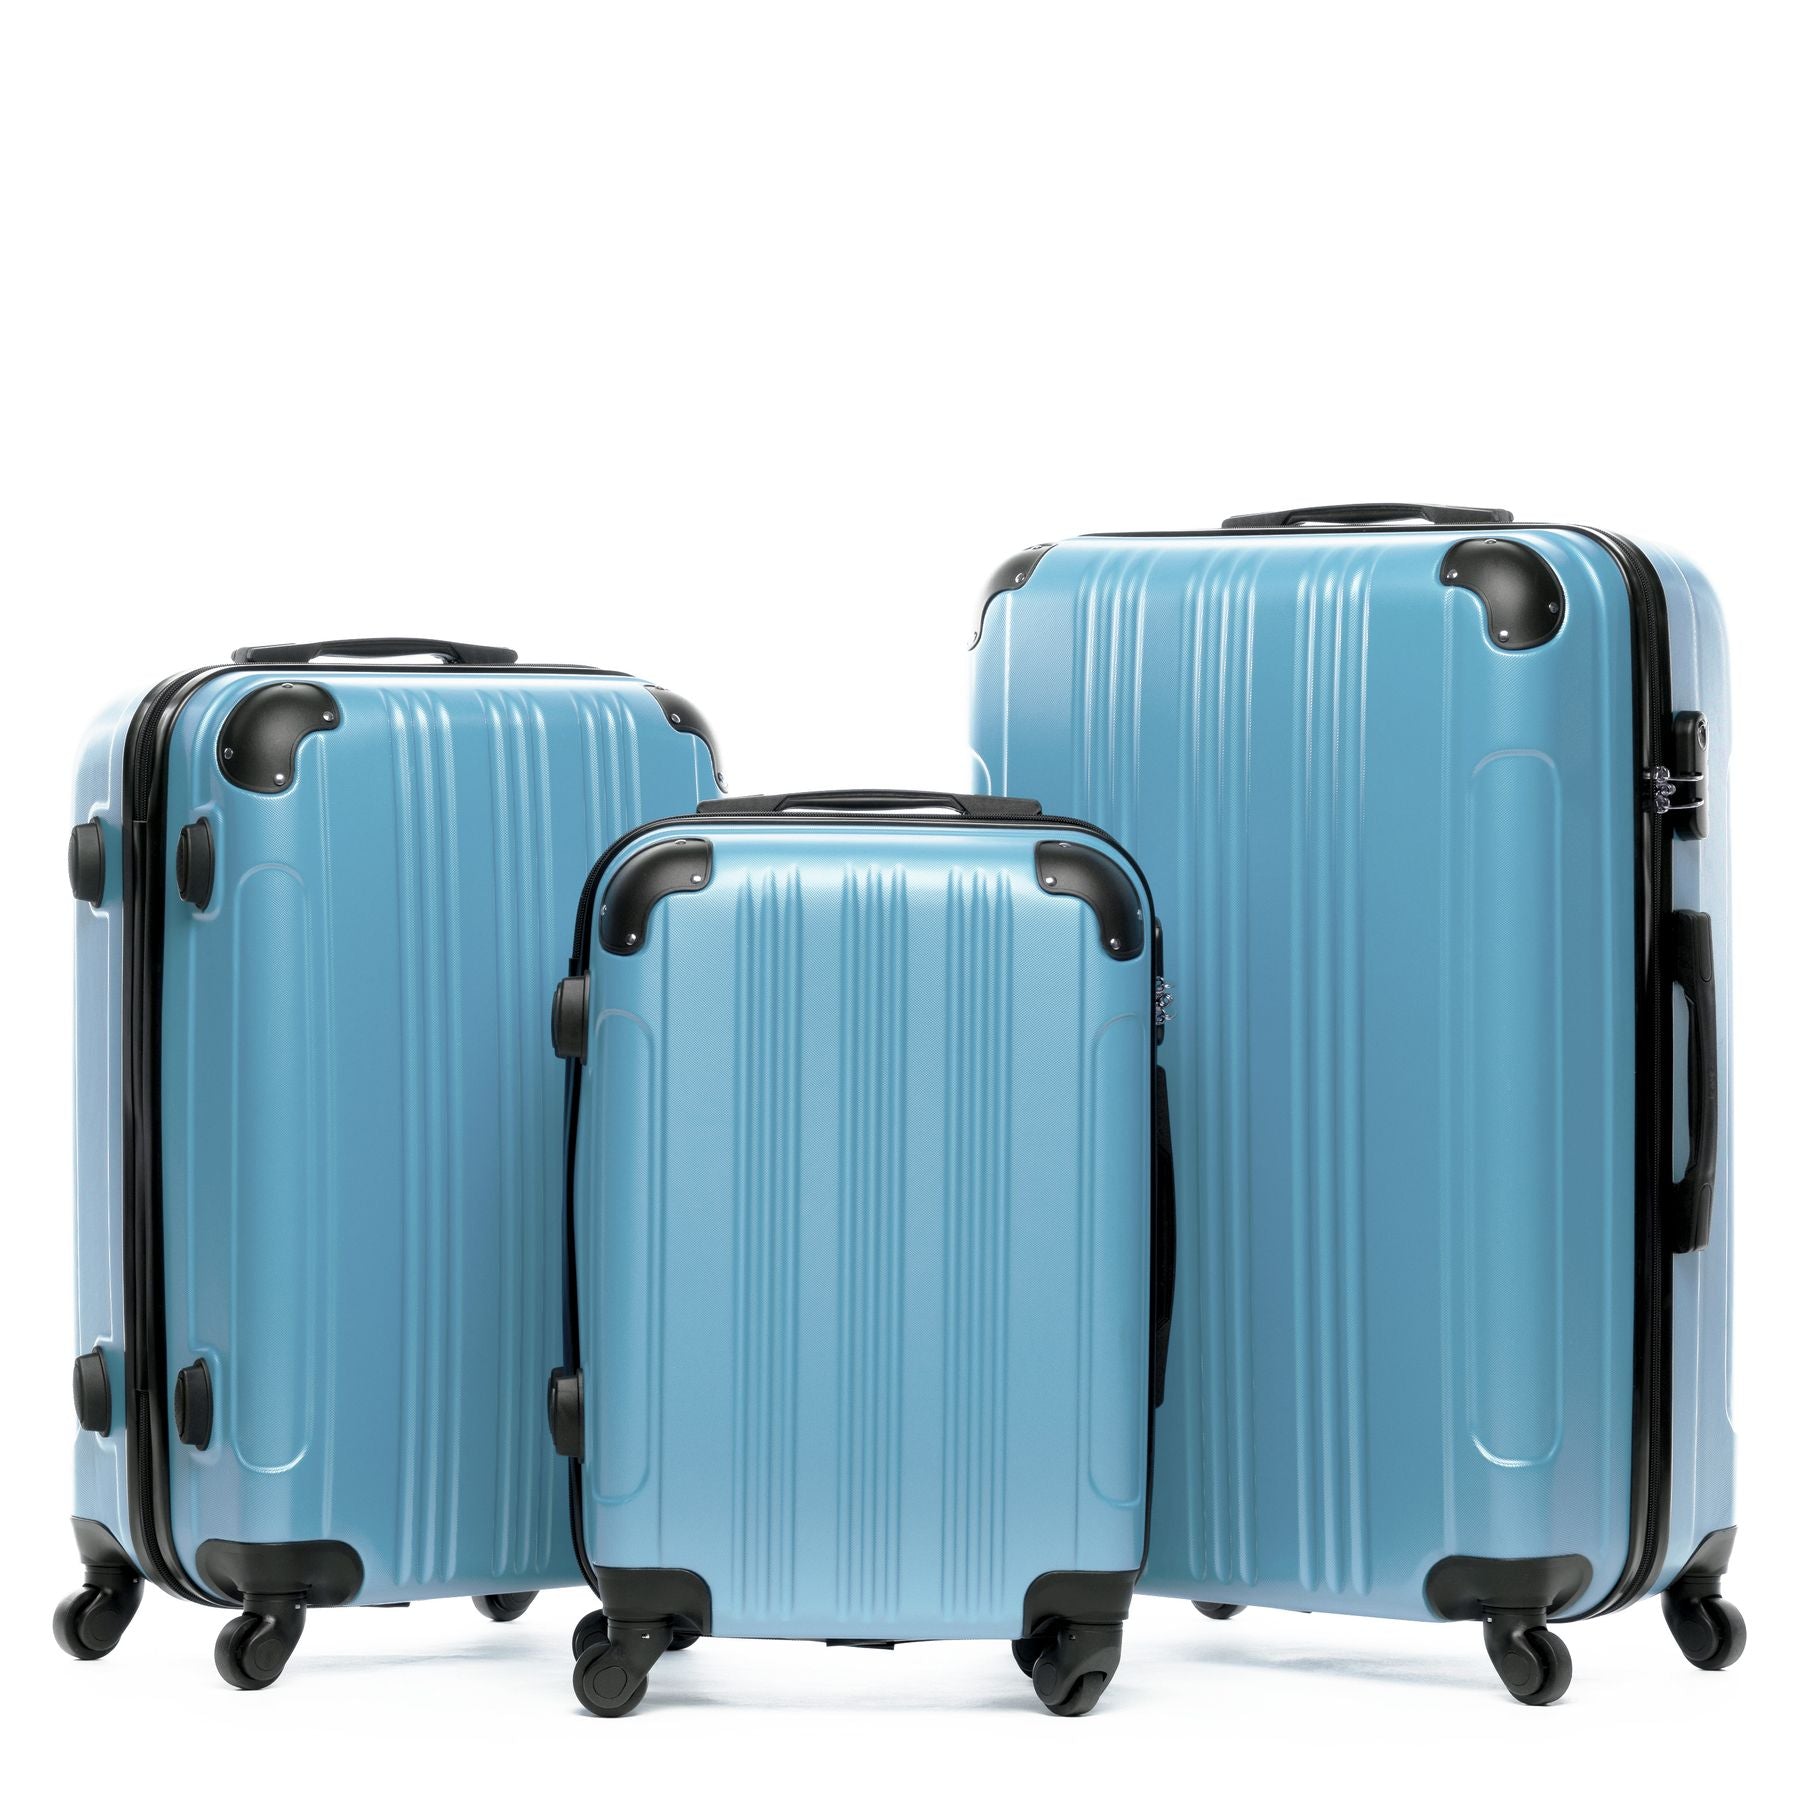 luggage set 3-kofferset-xb09 FERGÉ ABS QUÉBEC parent 29653